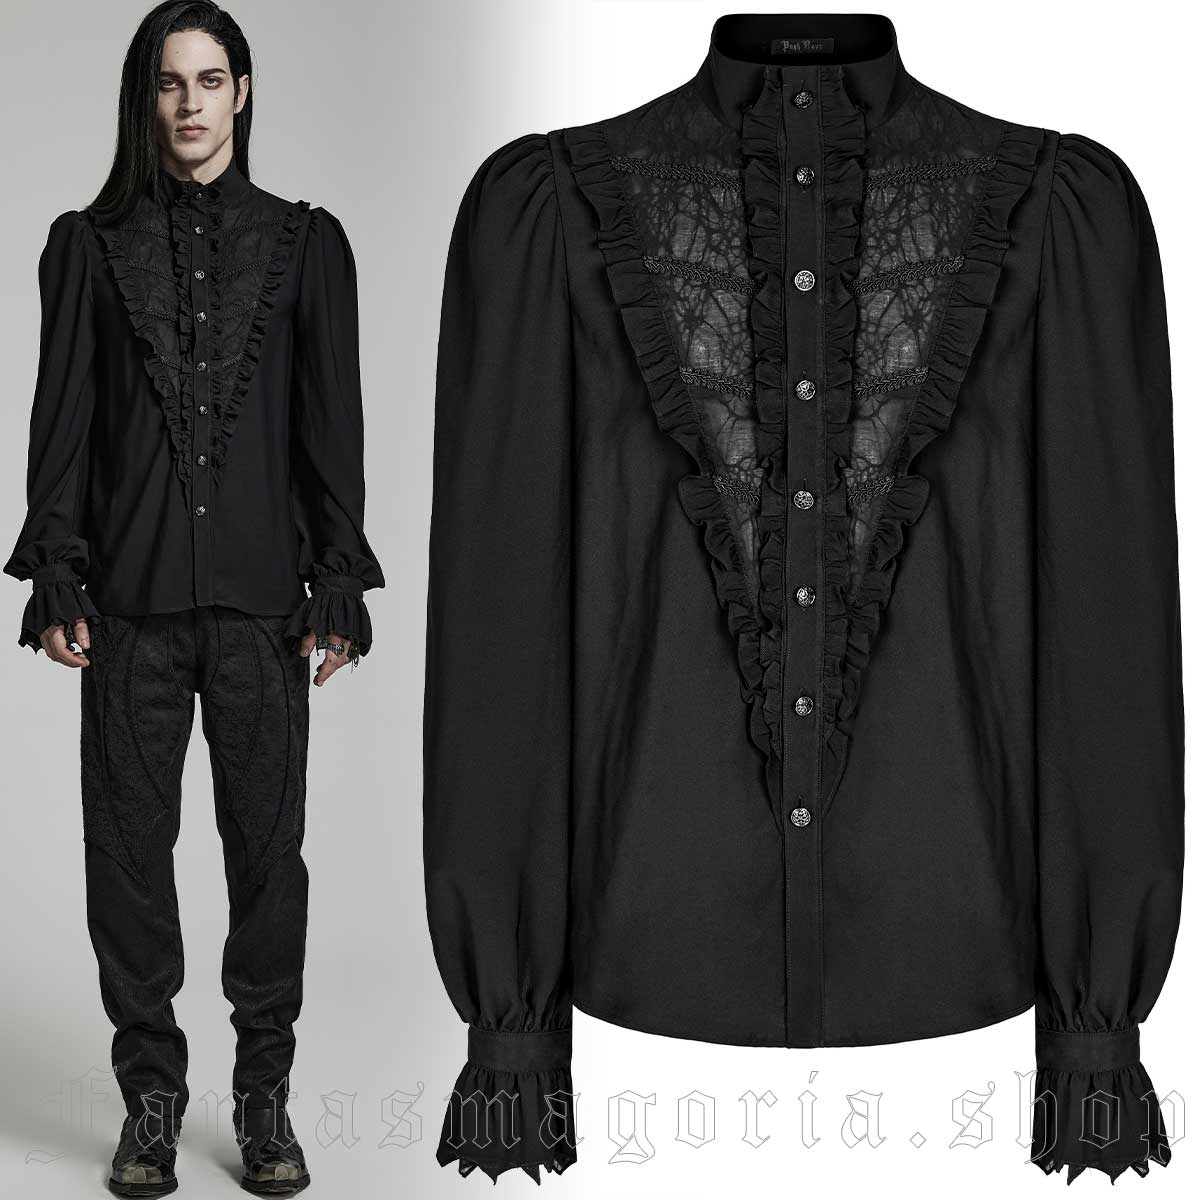 Men's Romantic Gothic black frill detail front button-up long-sleeve shirt. - Punk Rave - WY-1486/BK